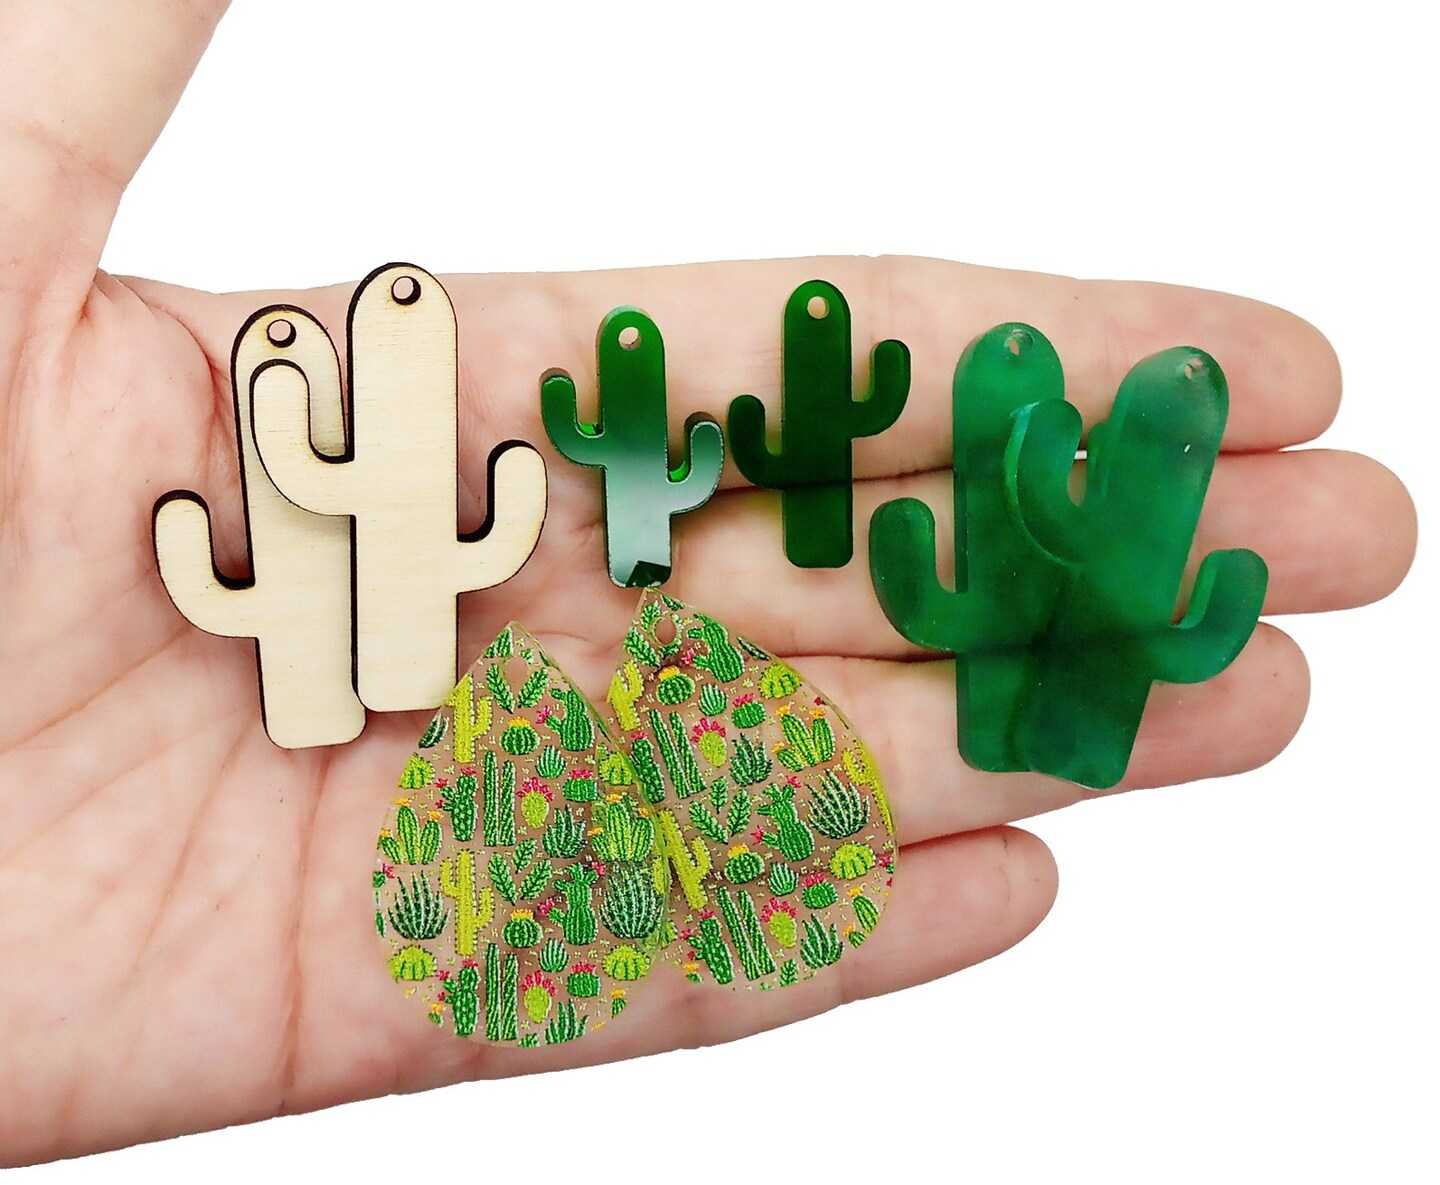 Cactus Earring Kit, Make 4 Pairs of Dangle Earrings, Adorabilities